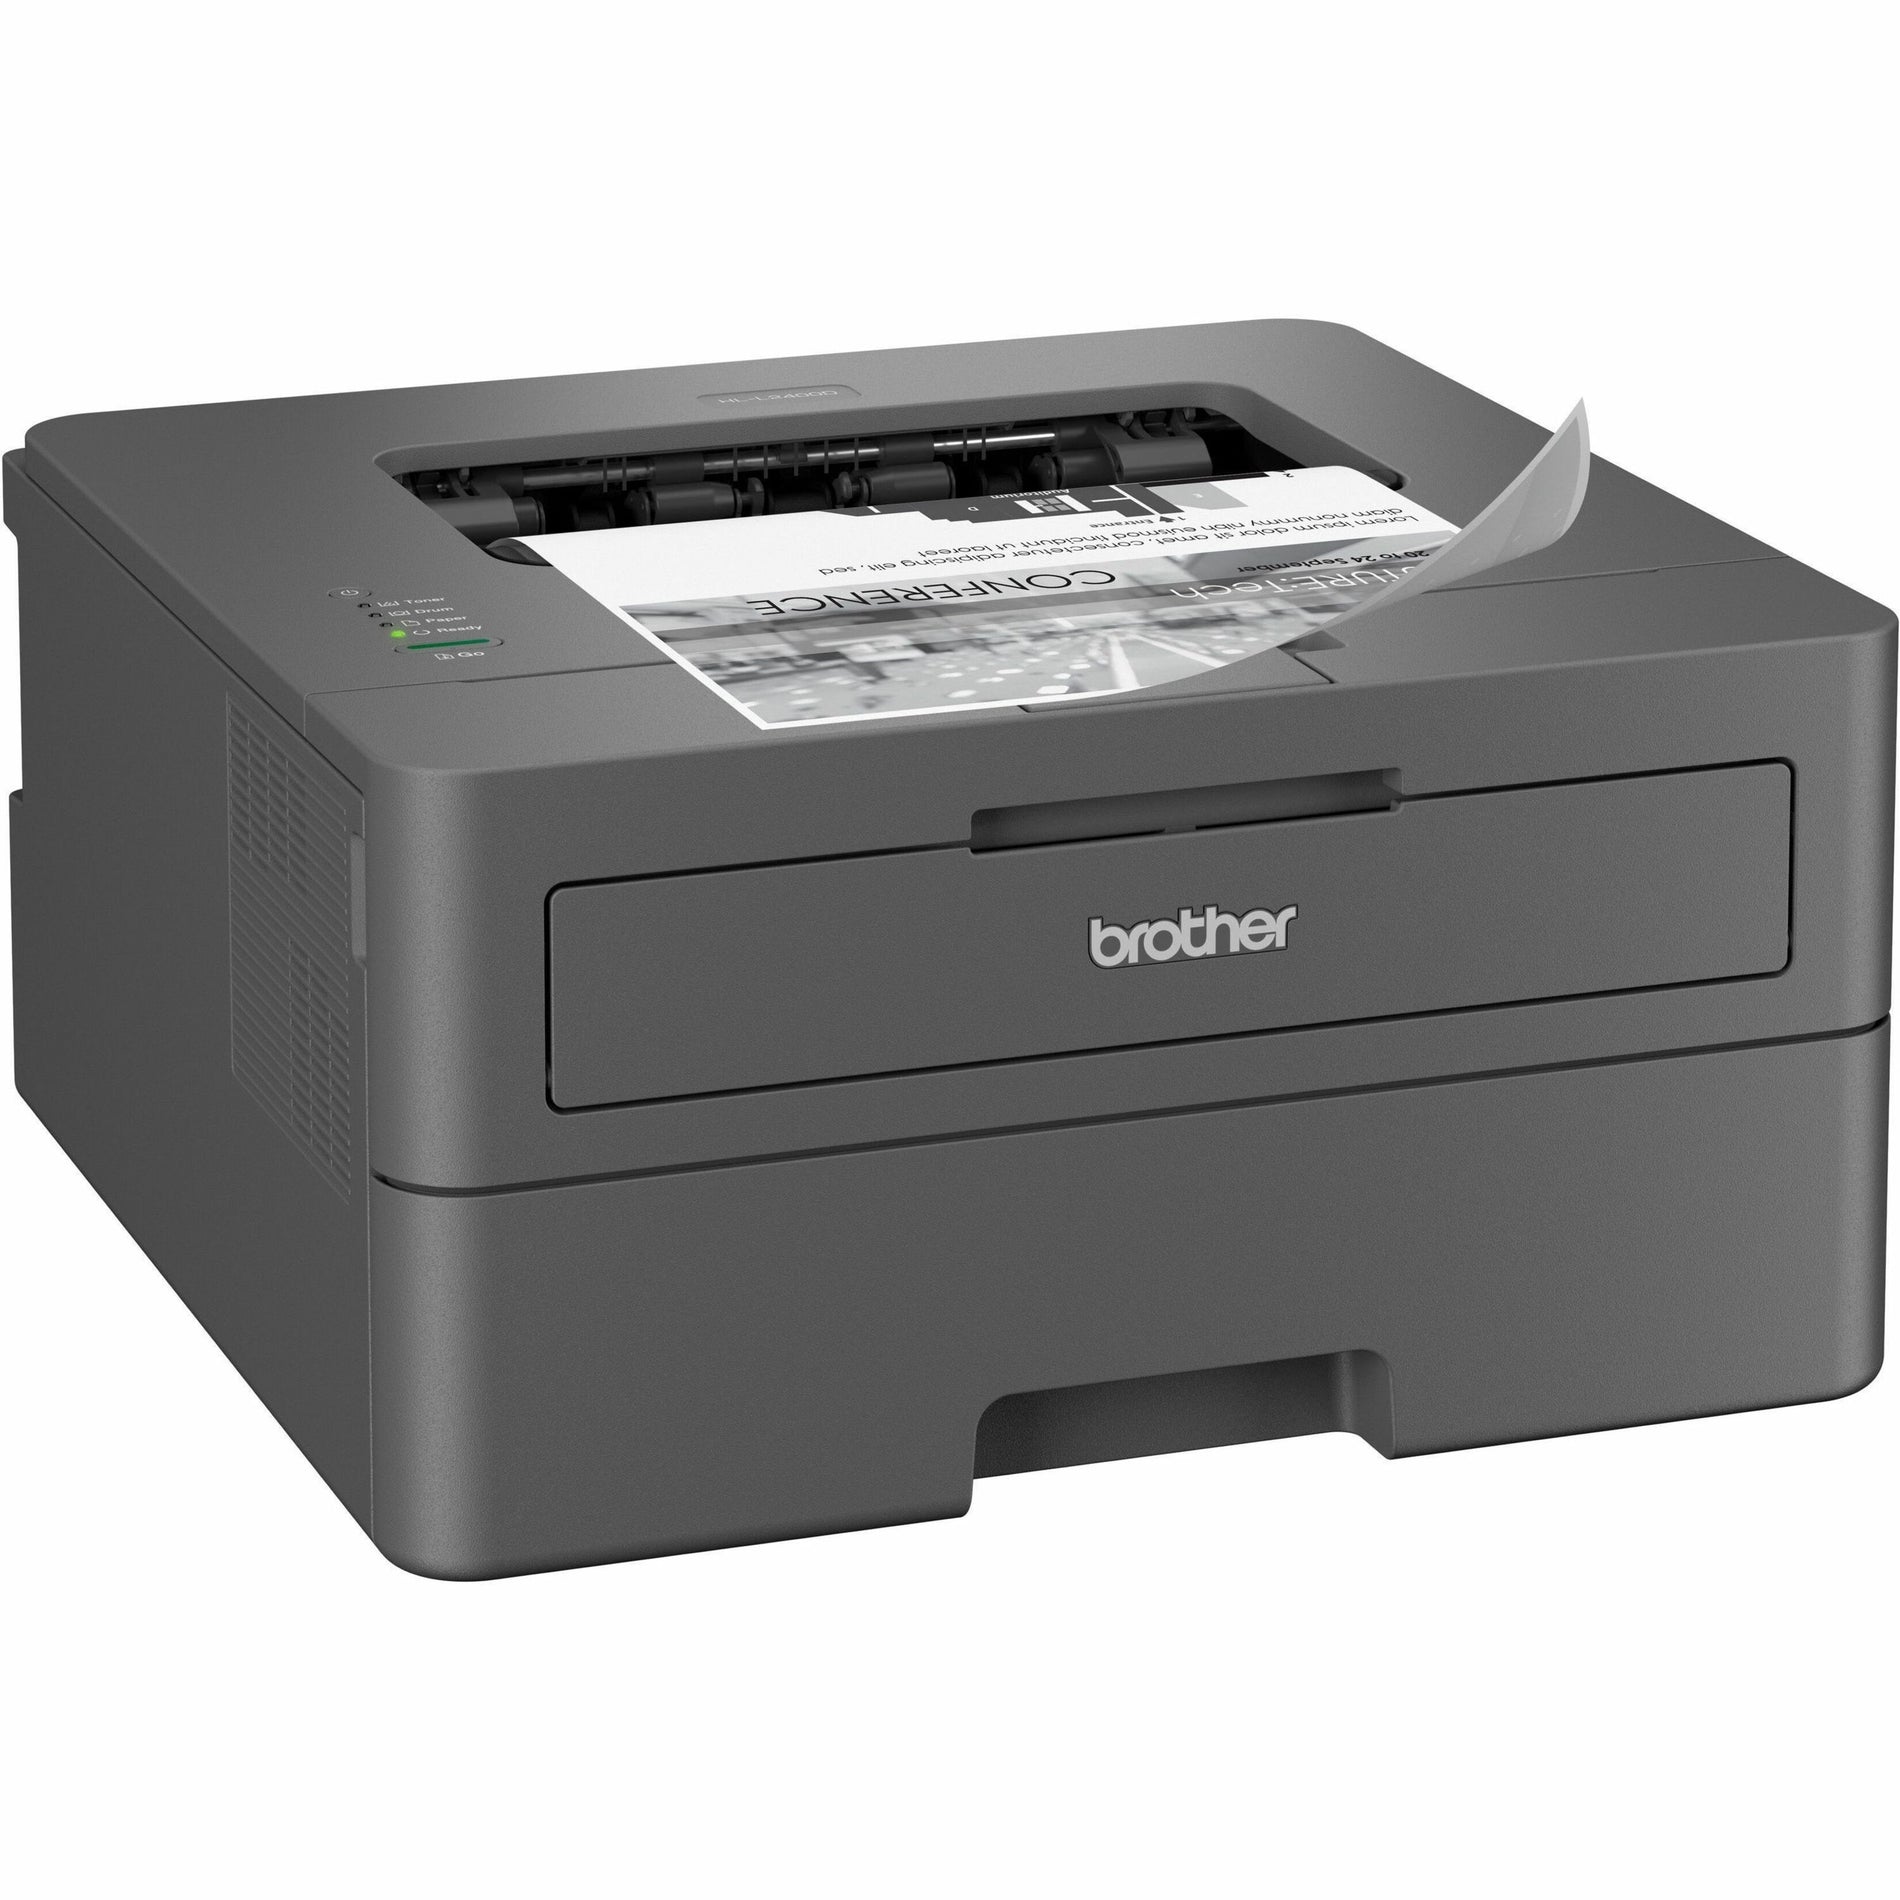 Brother HLL2400D HL-L2400D Compact Laser Printer, Monochrome, 32ppm, 1200 x 1200 dpi, Automatic Duplex Printing